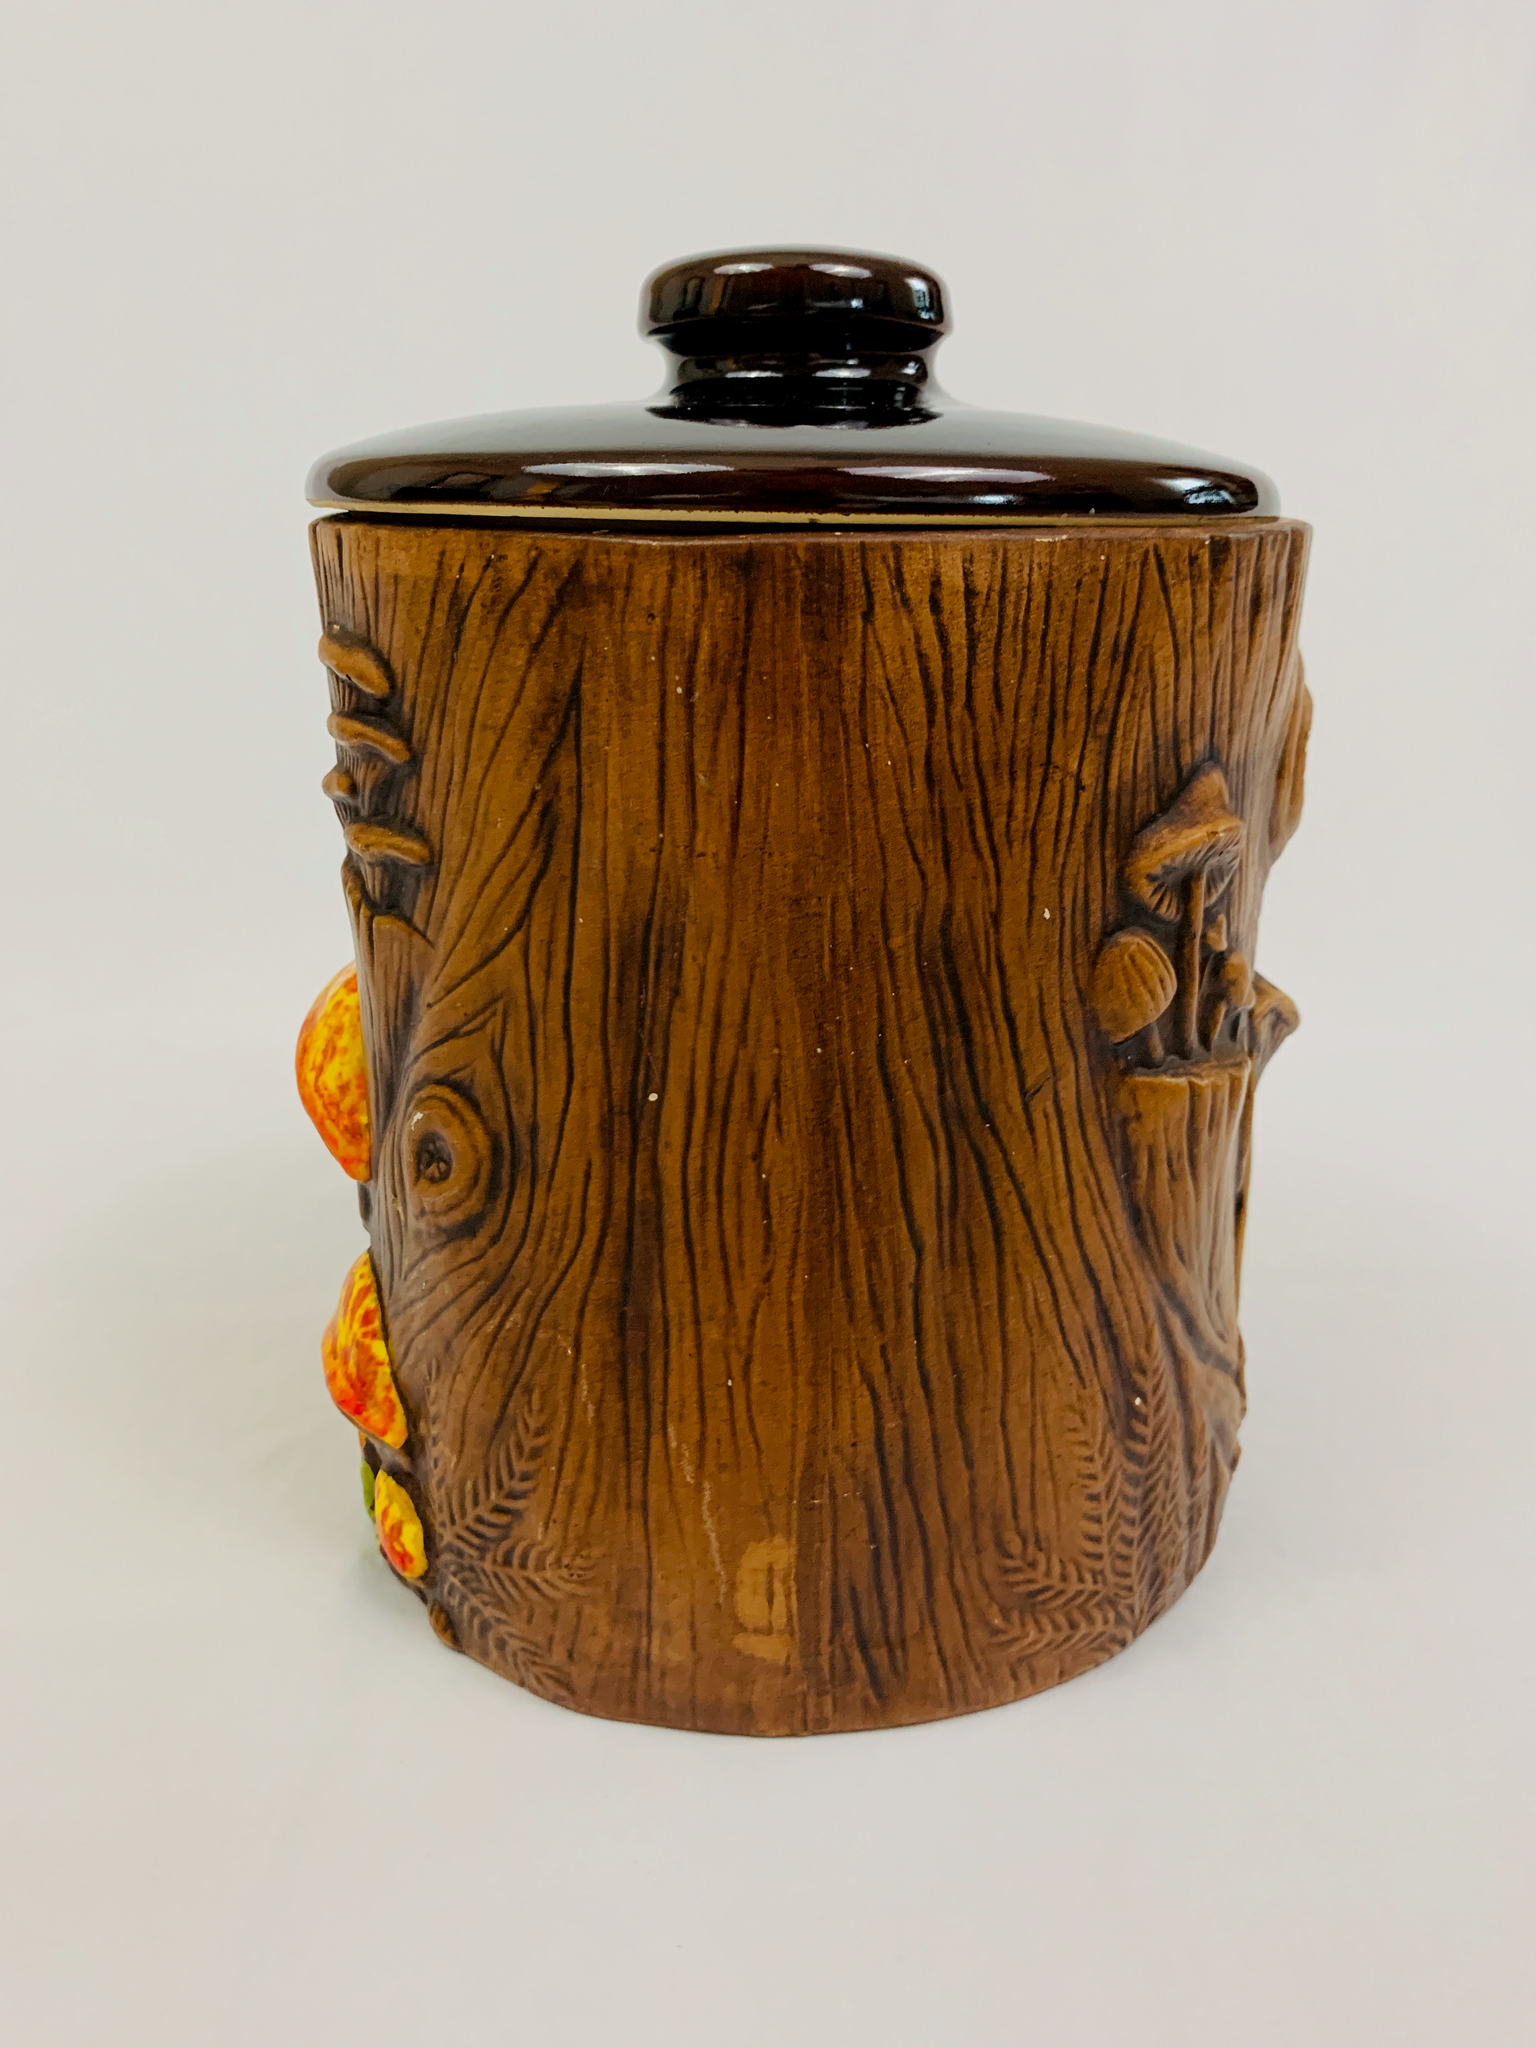 Vintage Flip Top Canning Jar Large Canister With Mushrooms 